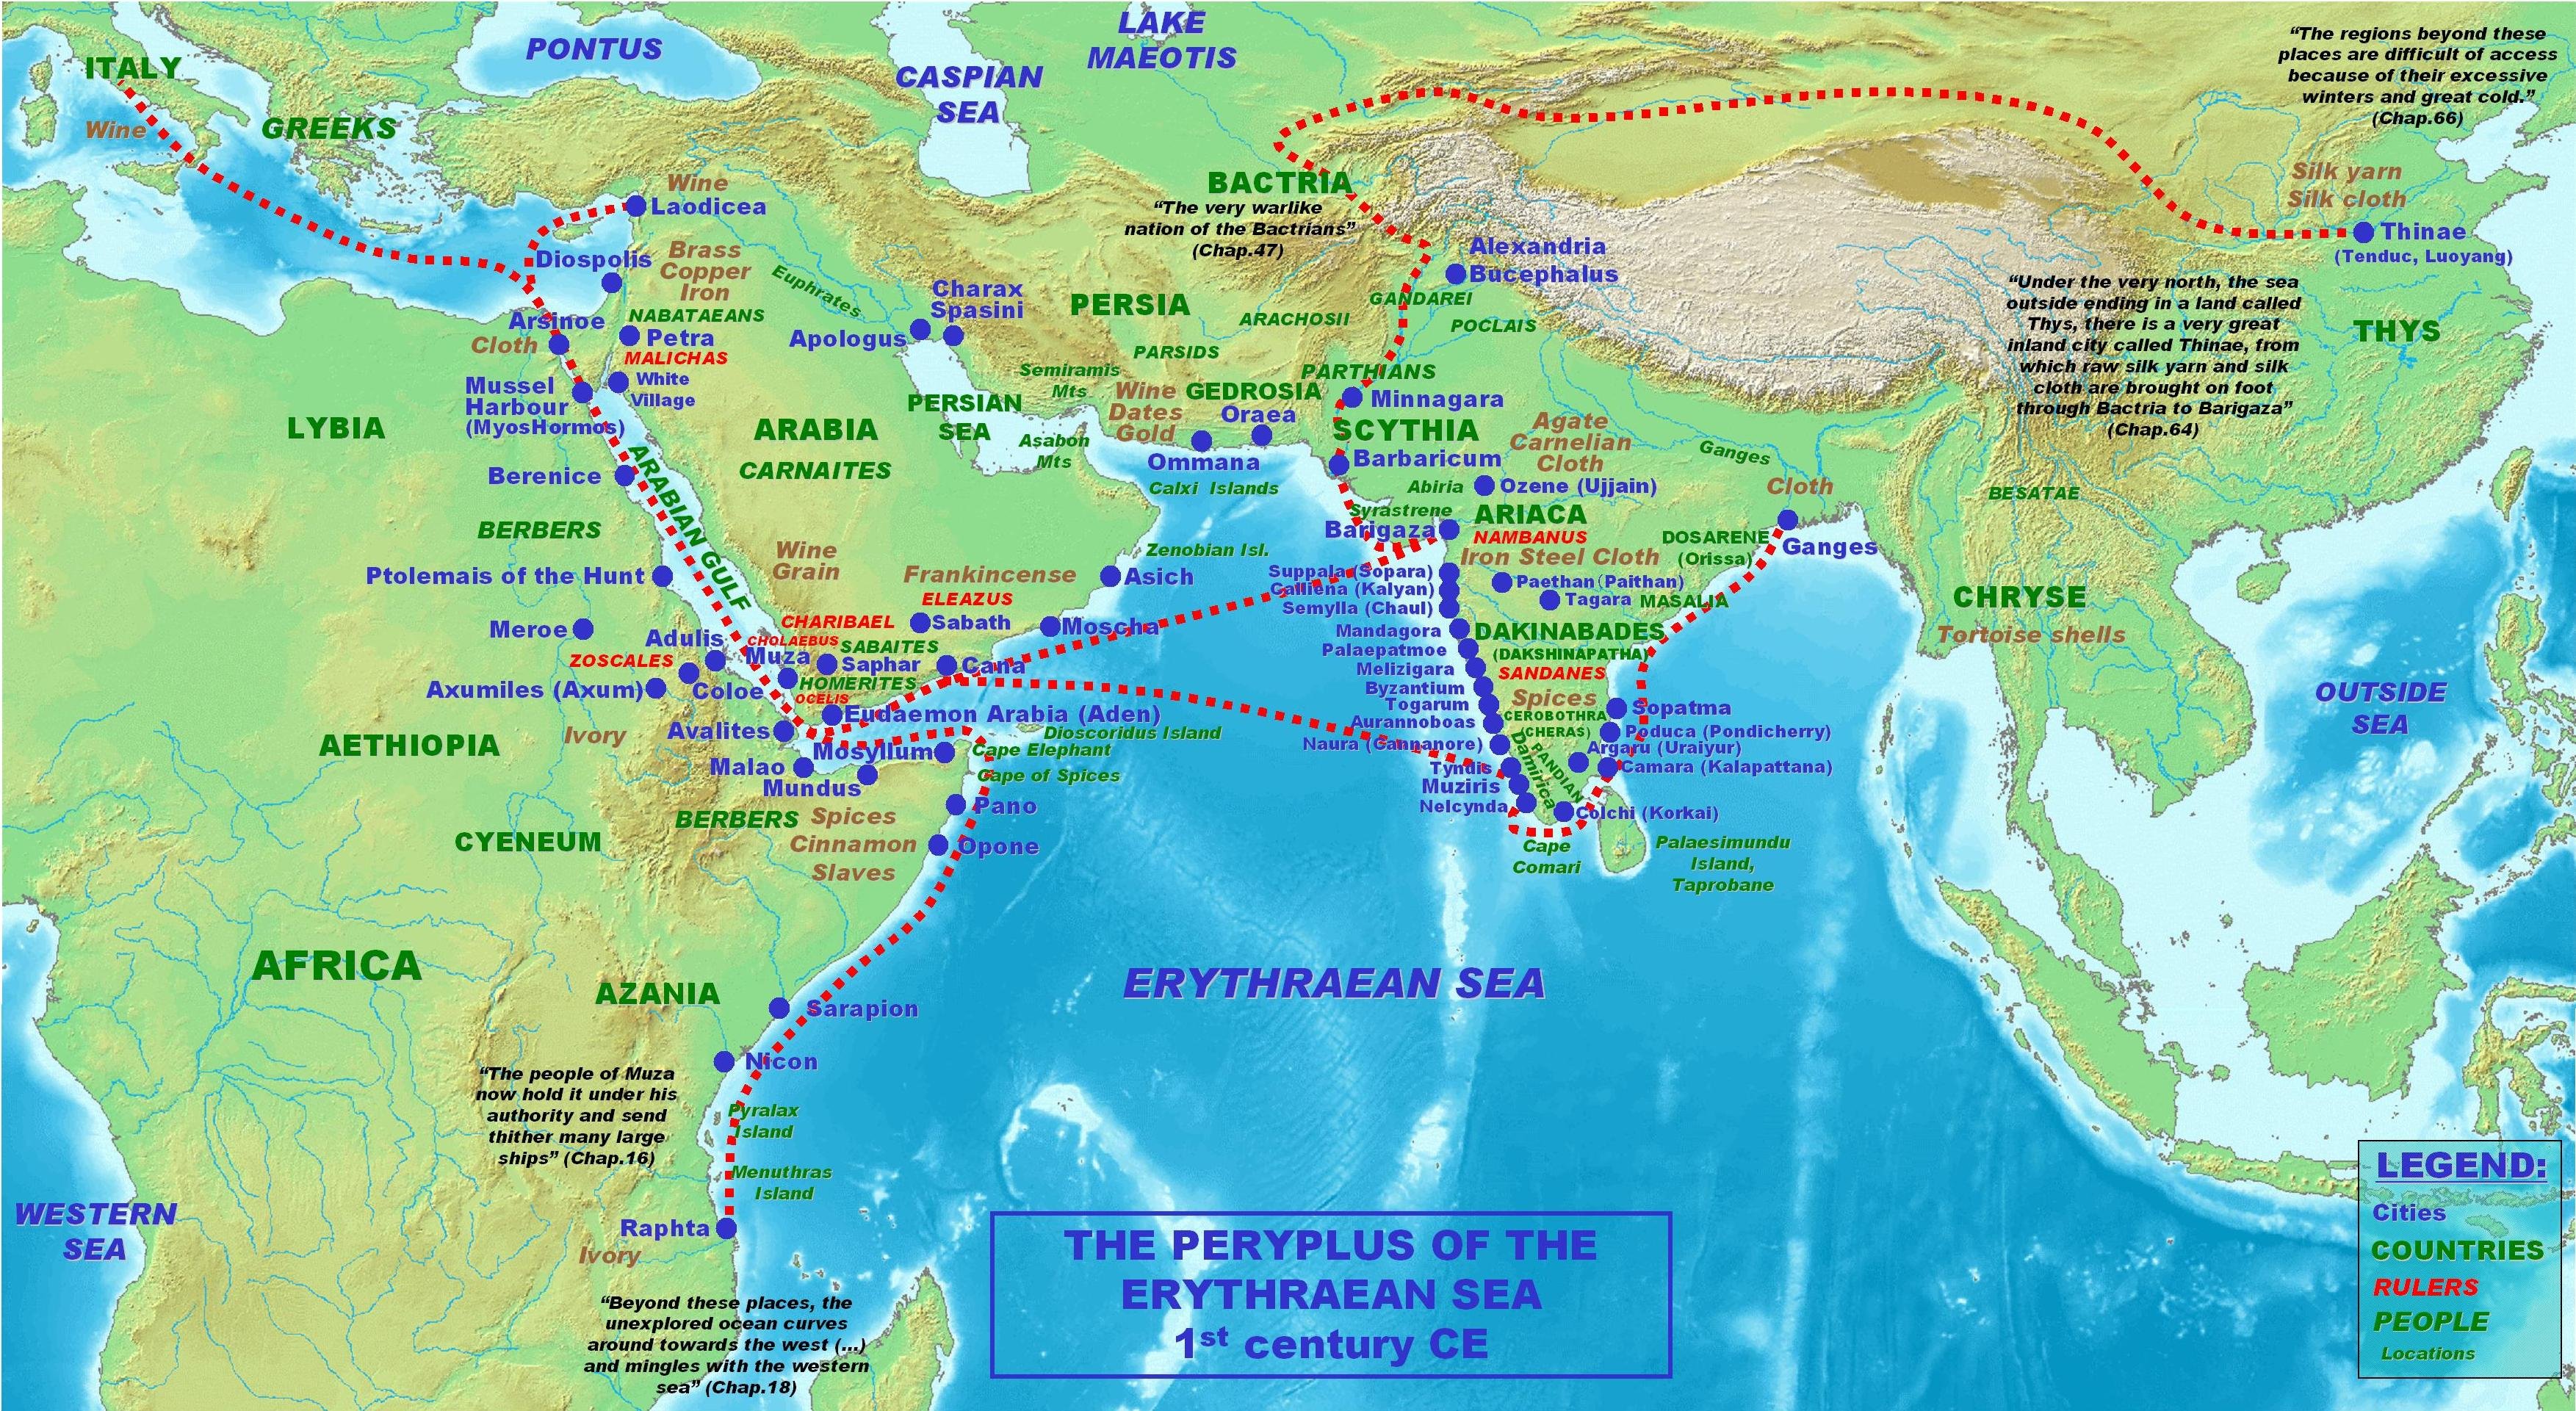 Peryplus of the Erythraean sea (Ist century CE)